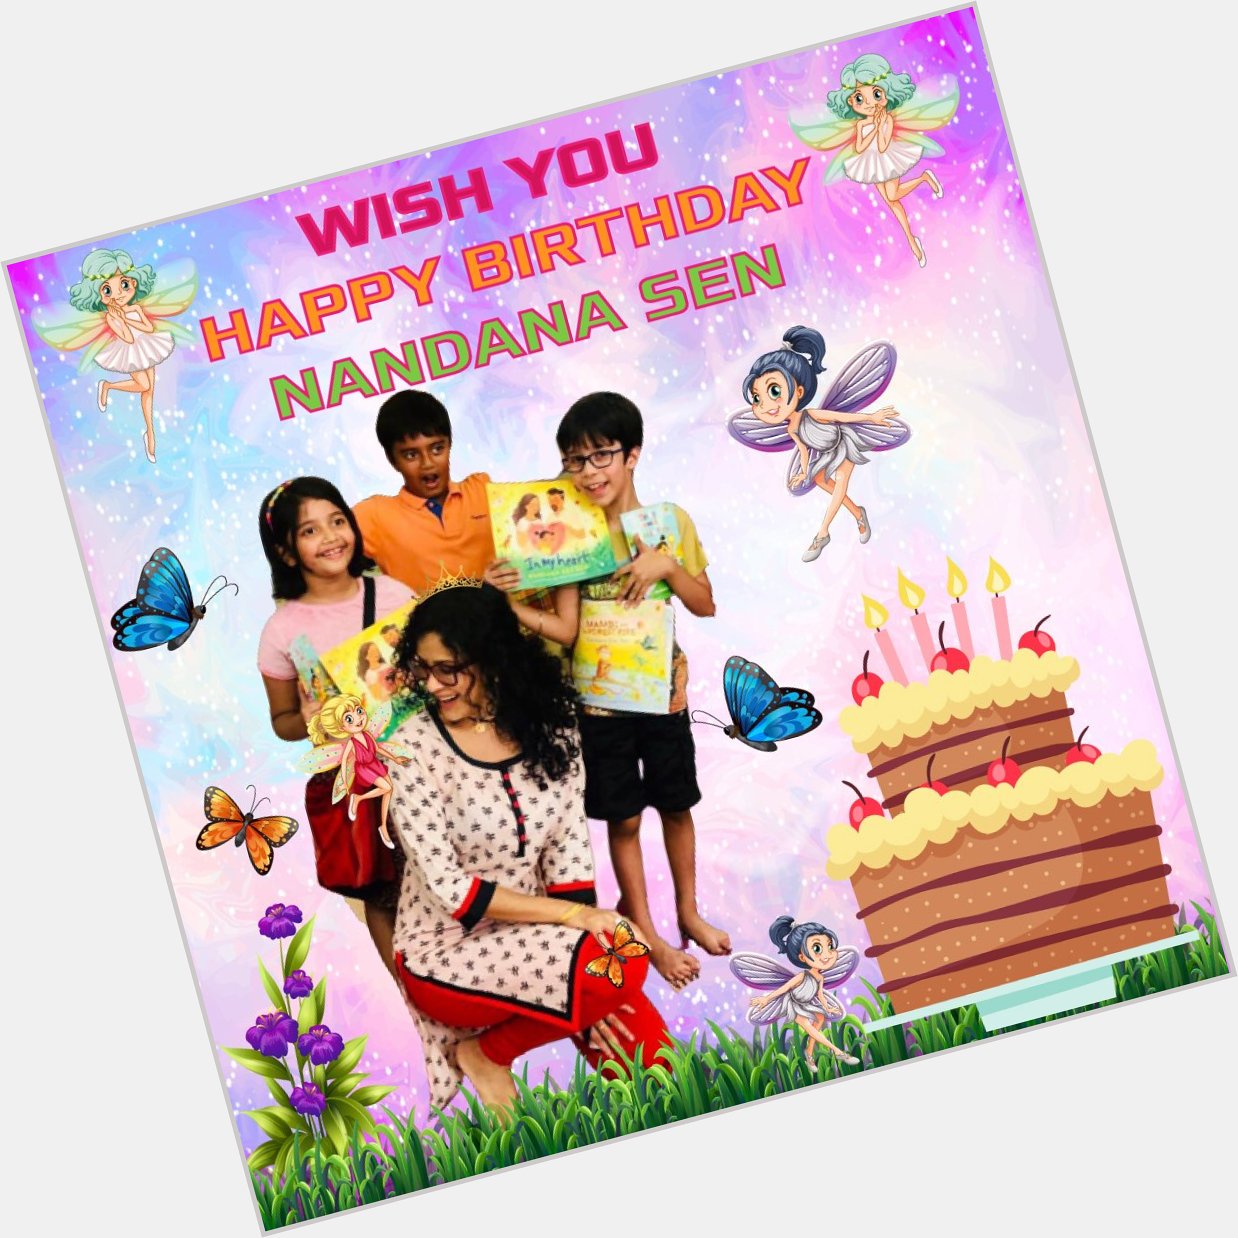  Wish you happy birthday Nandana Sen...I wish you always surround with angles... 